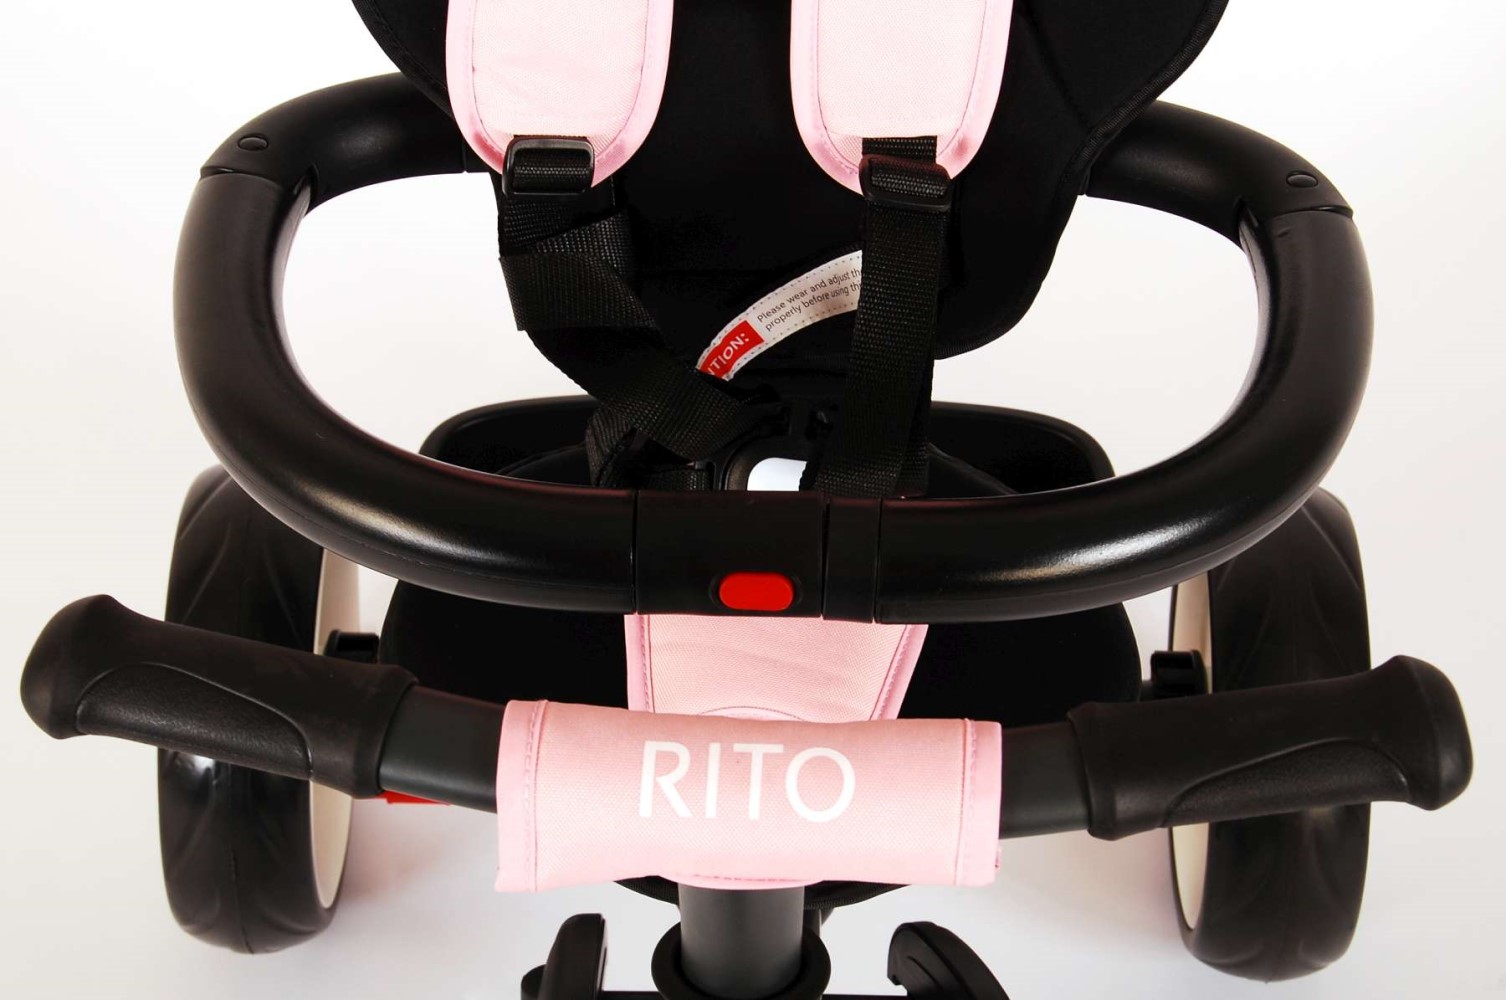 Dreirad QPlay Rito 3 in 1 für Mädchen Kinderrad in Pink Fahrrad